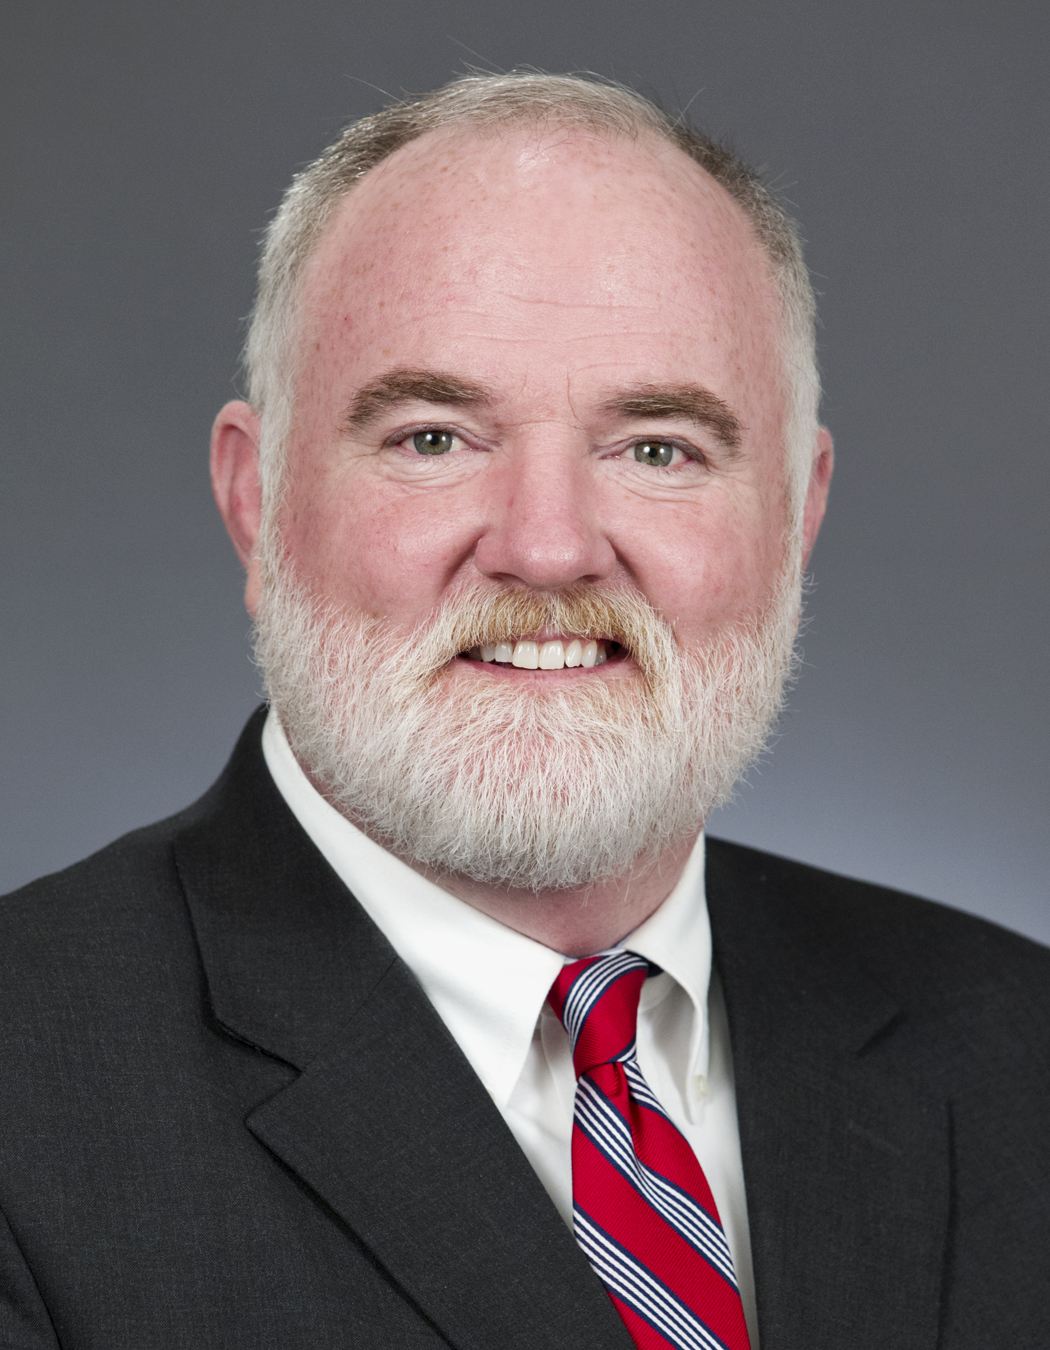 Representative Bob Loonan